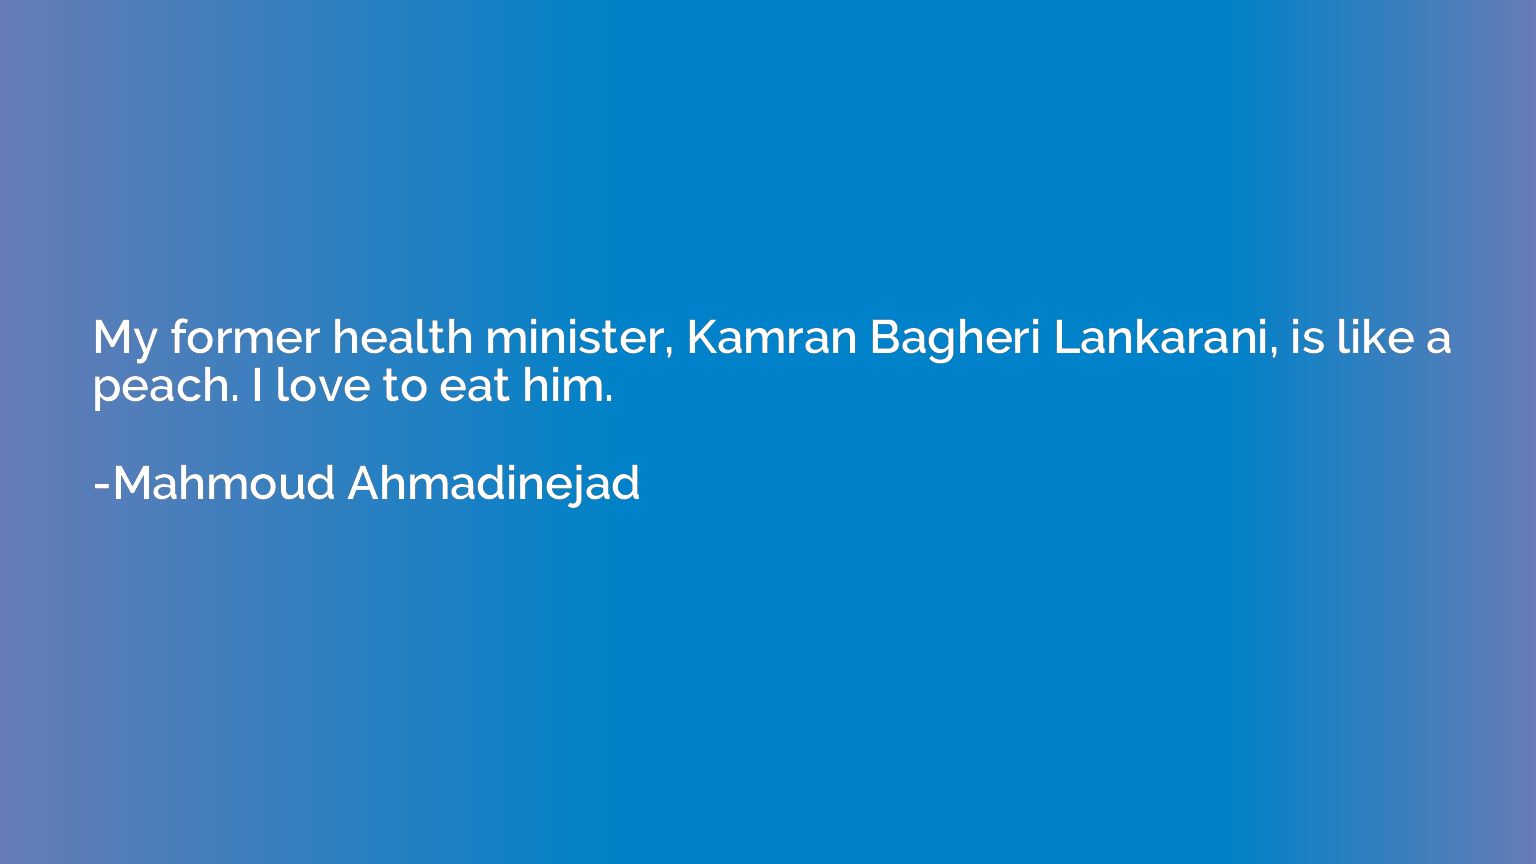 My former health minister, Kamran Bagheri Lankarani, is like